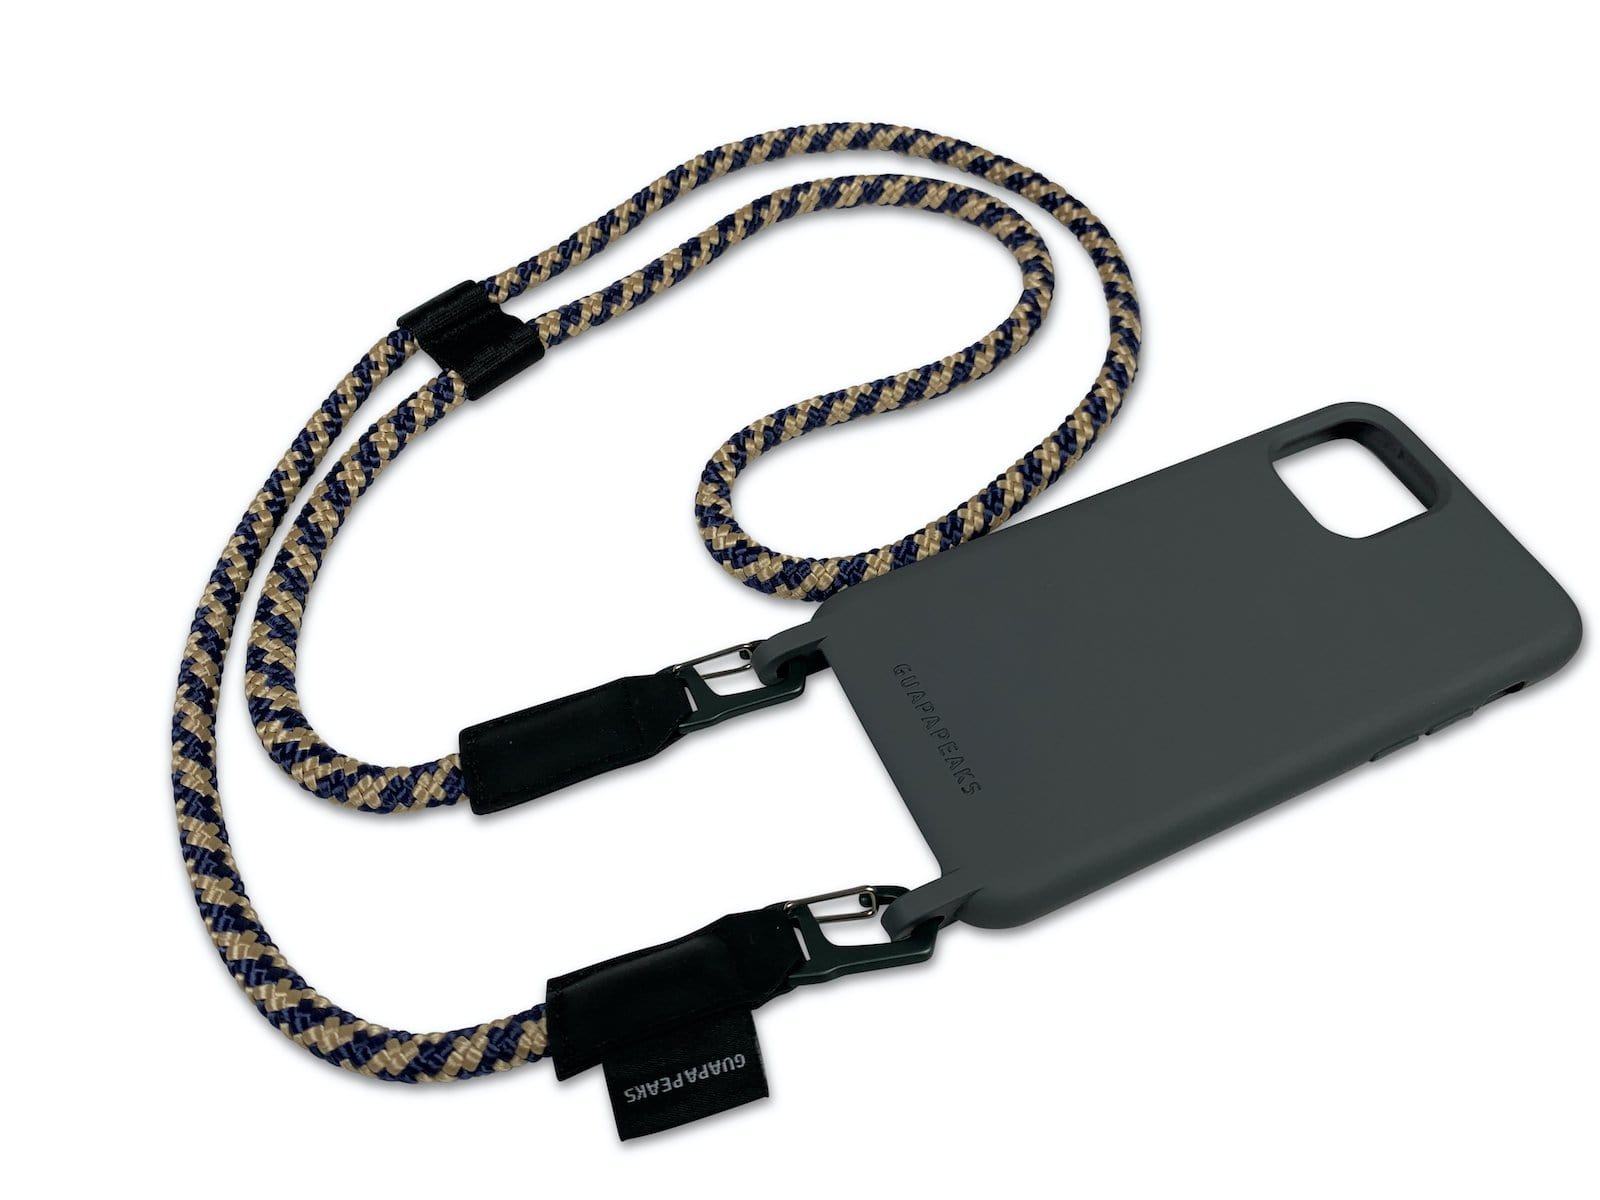 Monaco - Phone & Camera Utility Strap